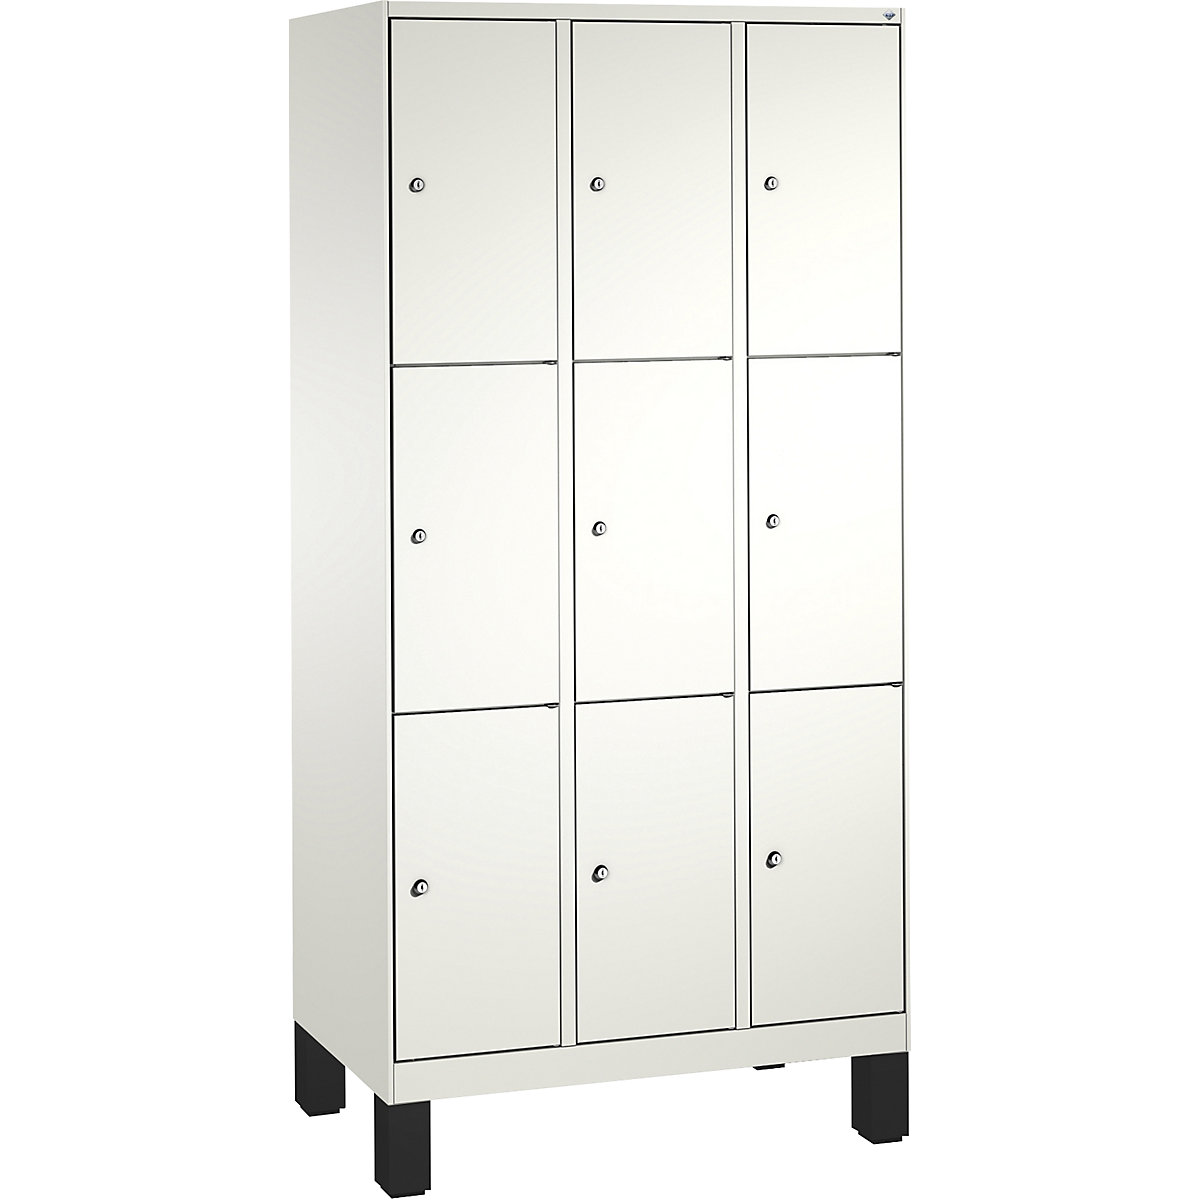 EVOLO locker unit, with feet – C+P, 3 compartments, 3 shelf compartments each, compartment width 300 mm, traffic white / traffic white-10